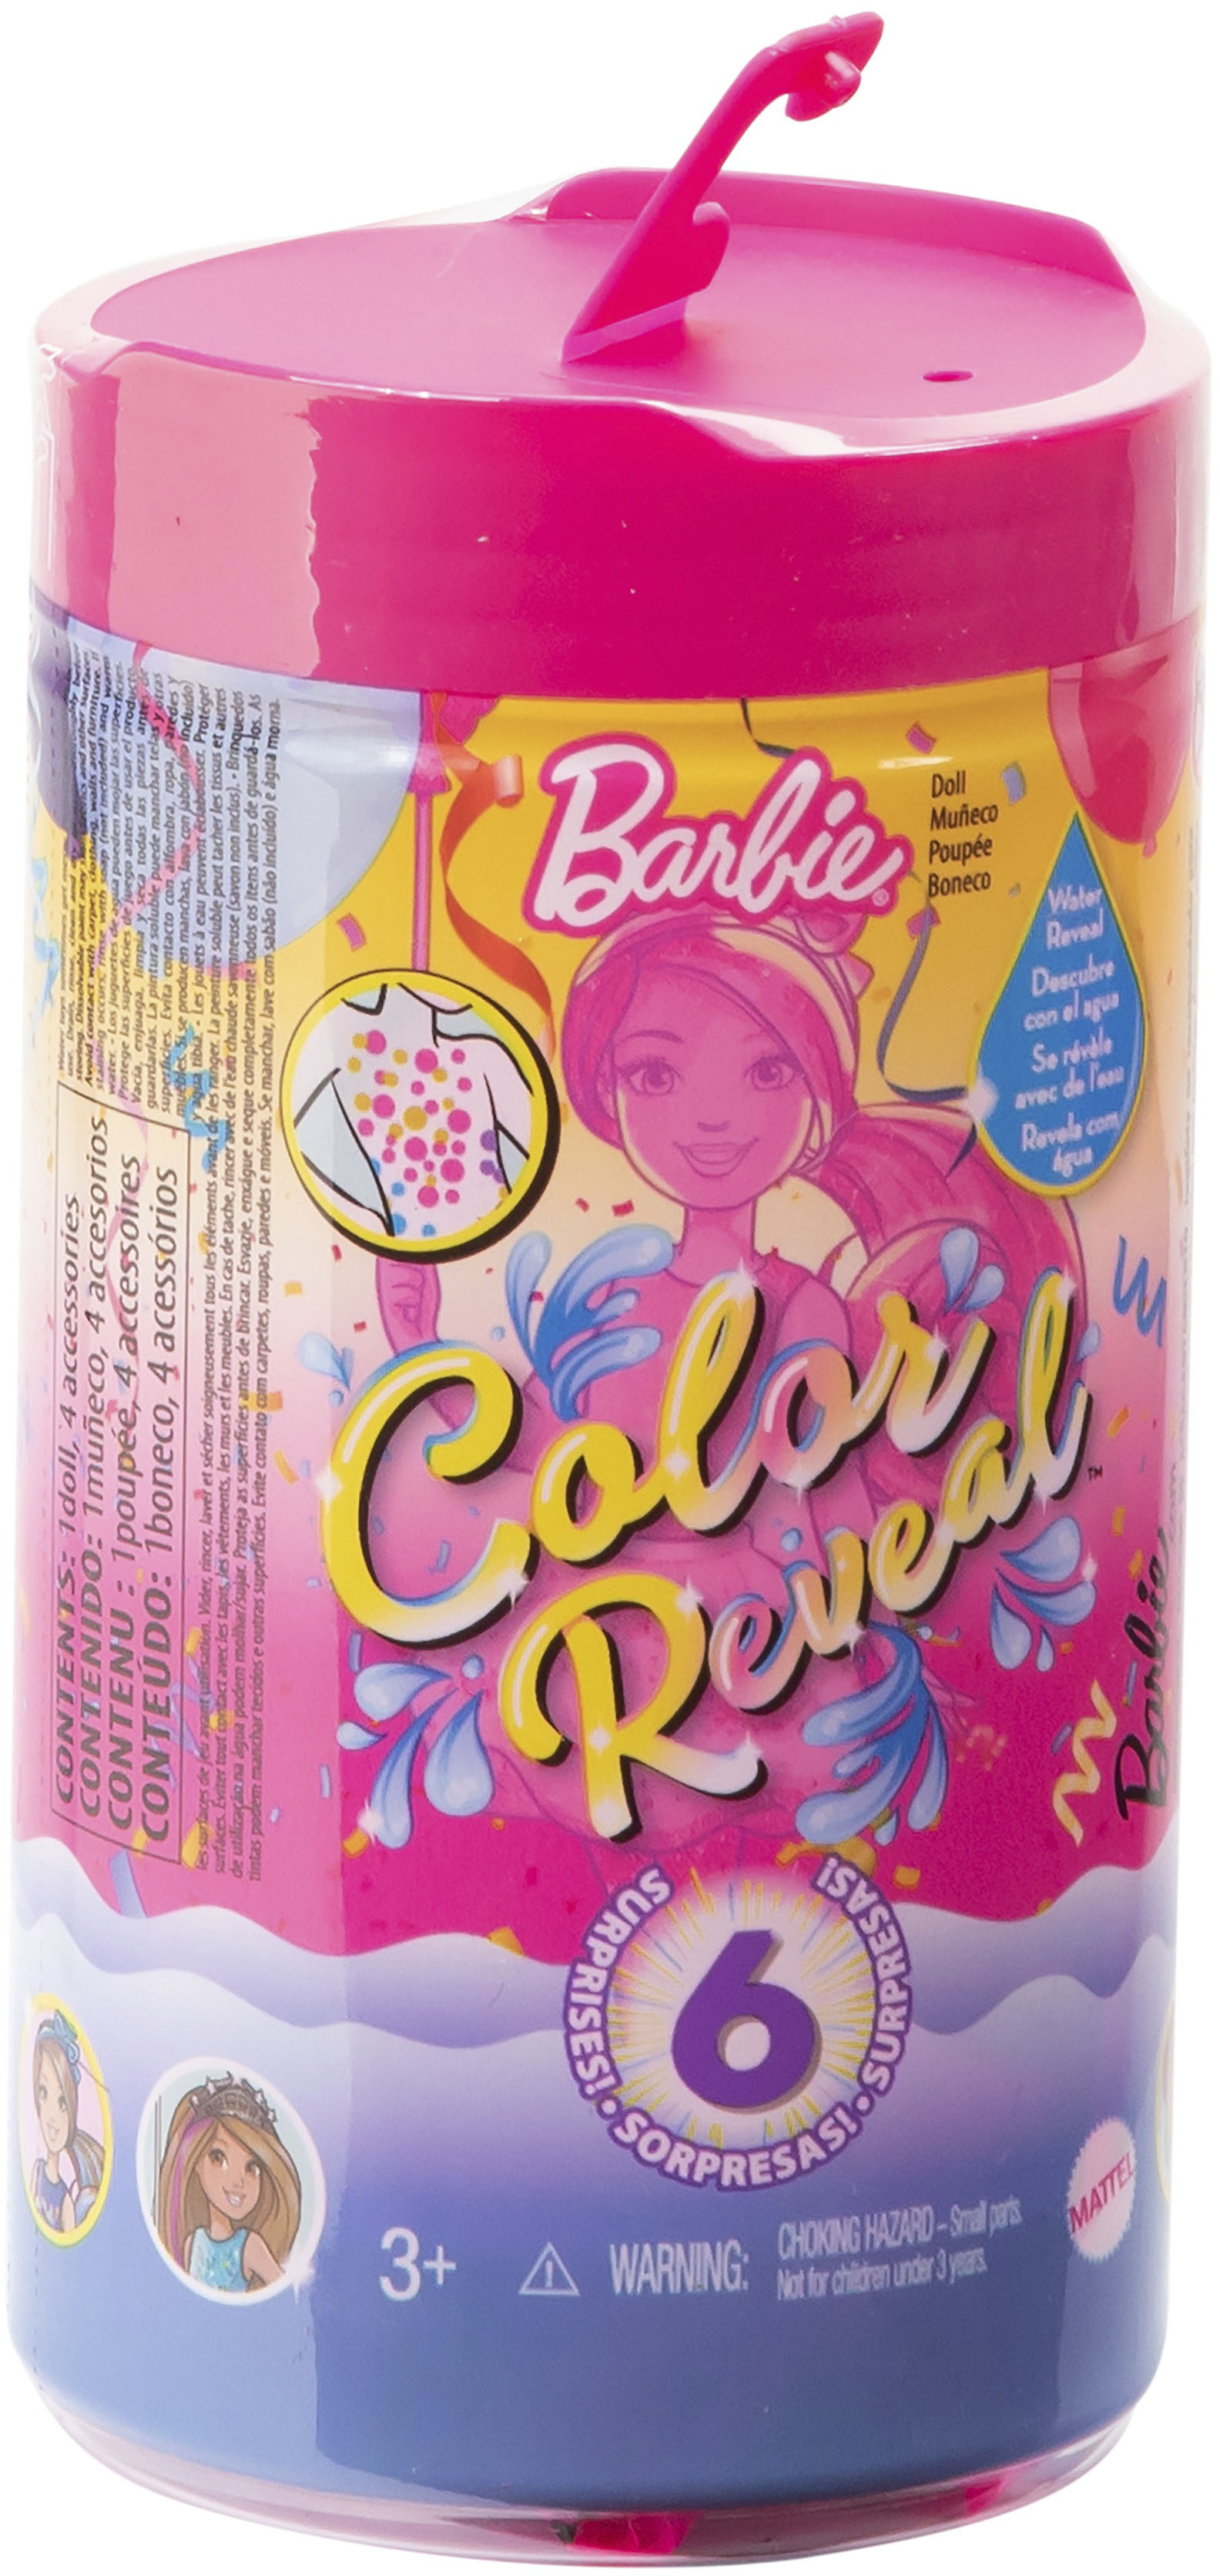 Left View: Barbie Chelsea Color Reveal Small Doll with Confetti Print & Accessories, 6 Surprises, Color Change